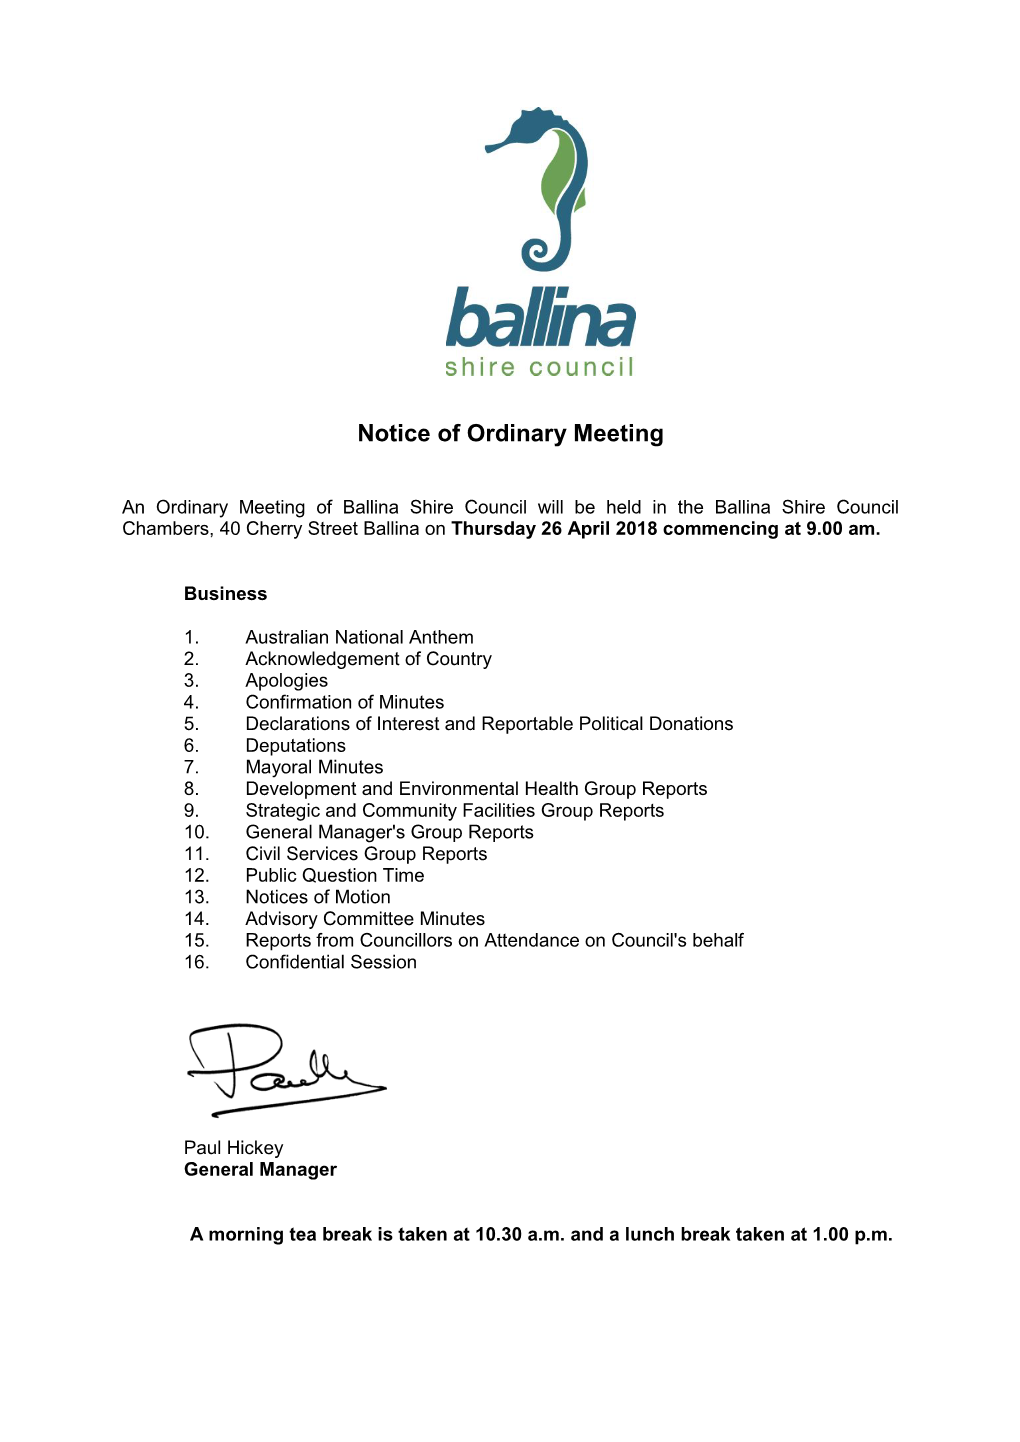 Agenda of Ordinary Meeting of Ballina Shire Council